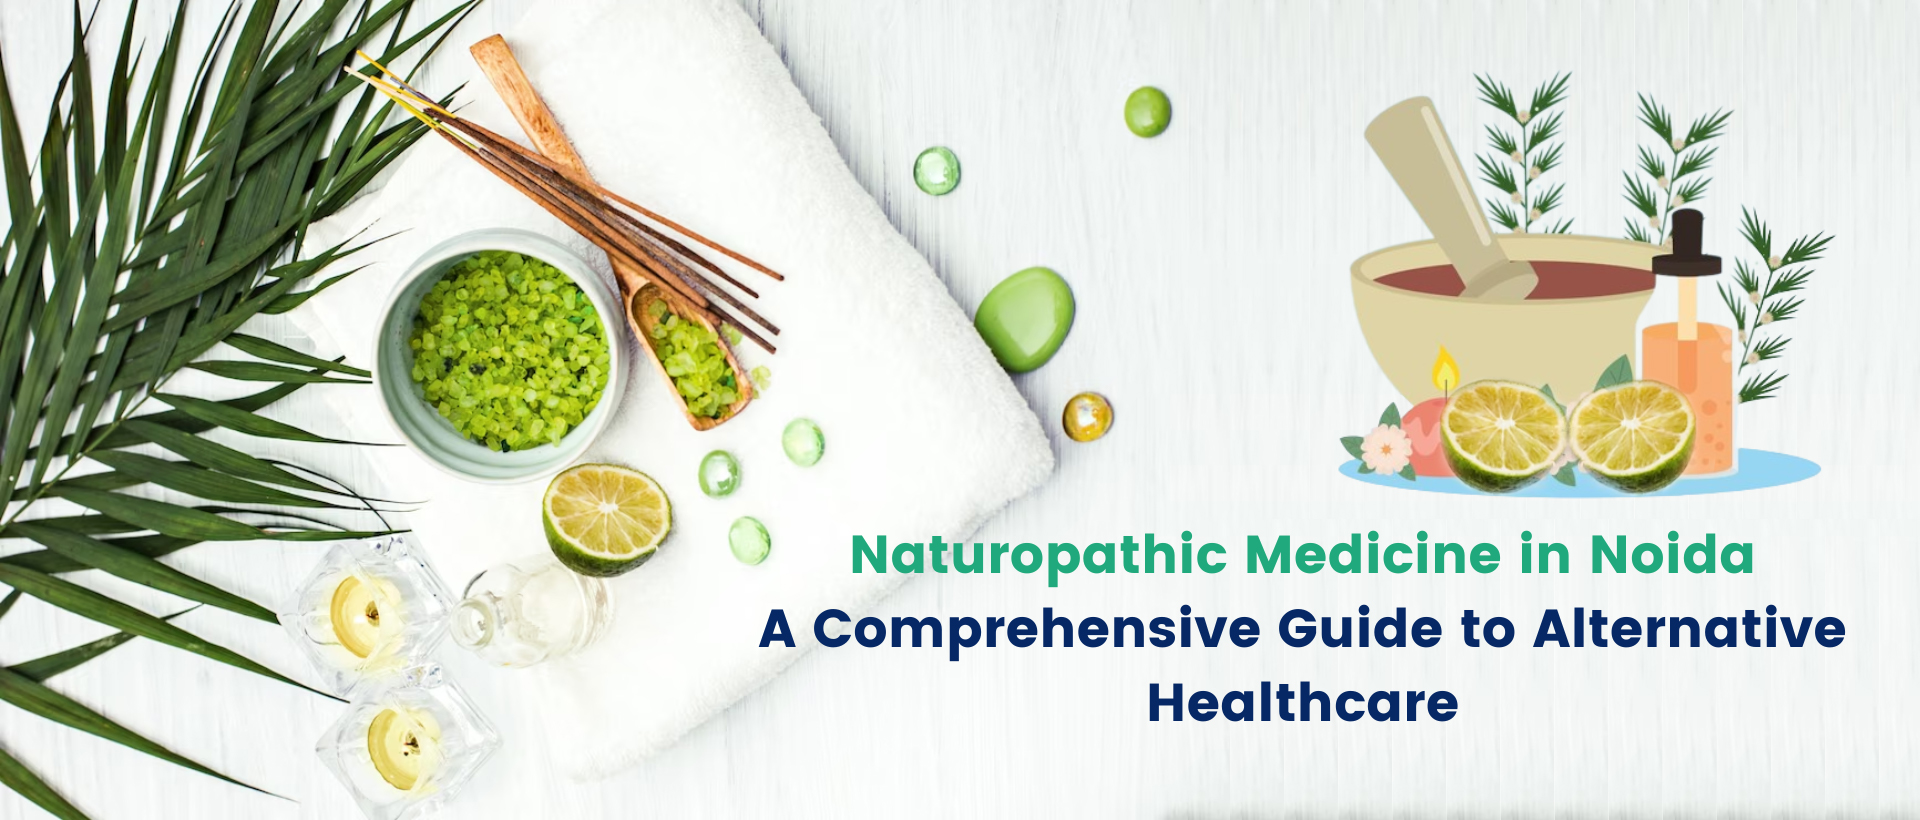 Naturopathic medicine in noida: a comprehensive guide to alternative healthcare